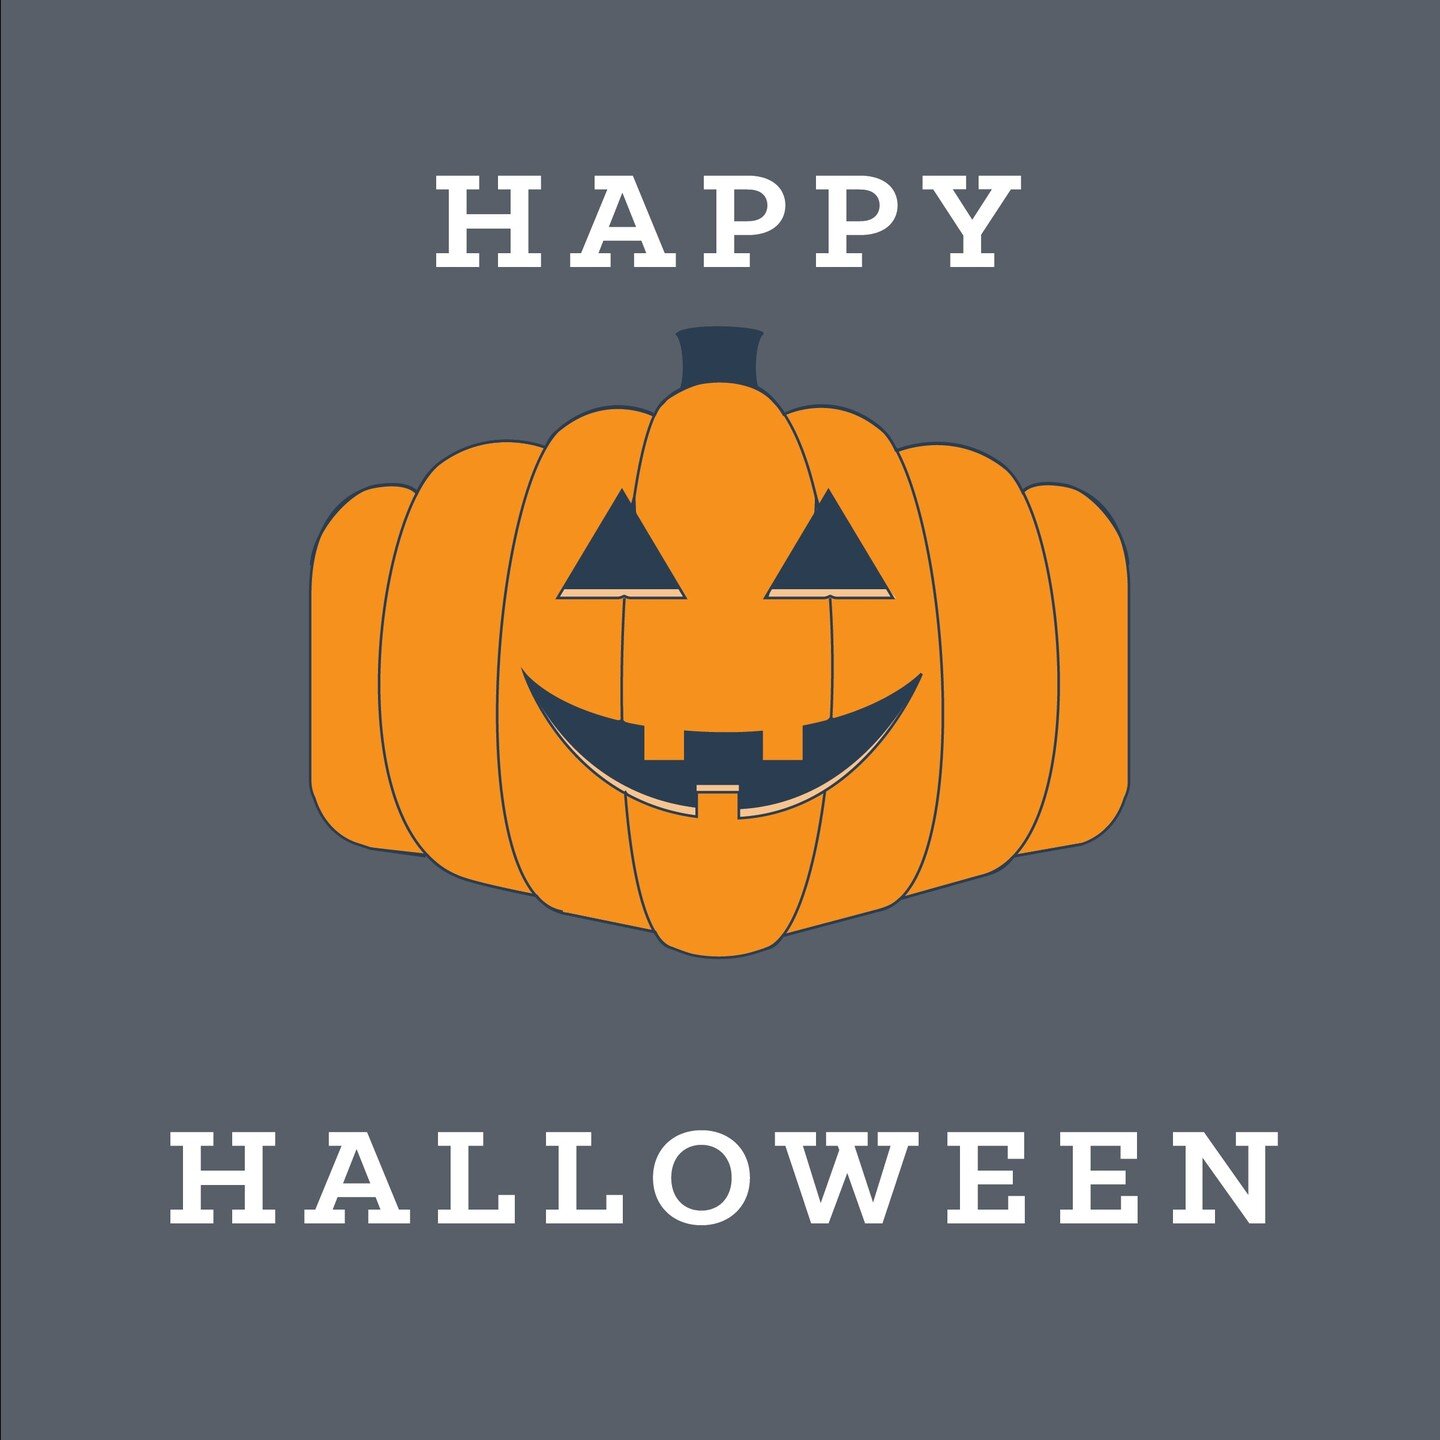 Happy Halloween!

#hivedesign #kansascity #design #halloween #jackolantern #behappy